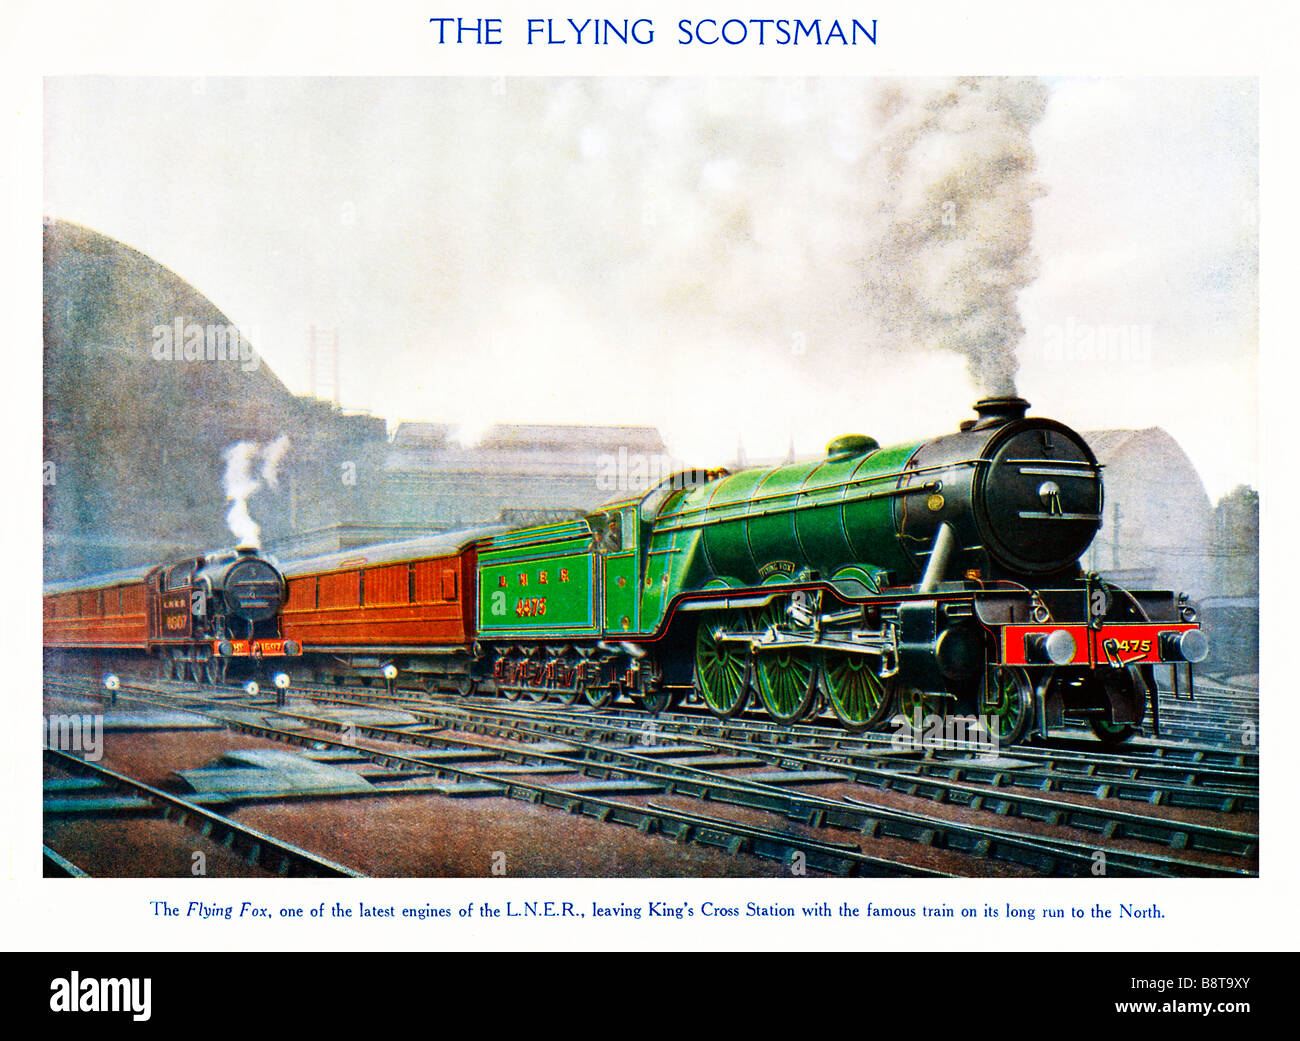 Flying Scotsman 1926 Gemälde des berühmten LNER-Zug gezogen von der Flying Fox-Motor verlassen Kings Cross für Schottland Stockfoto